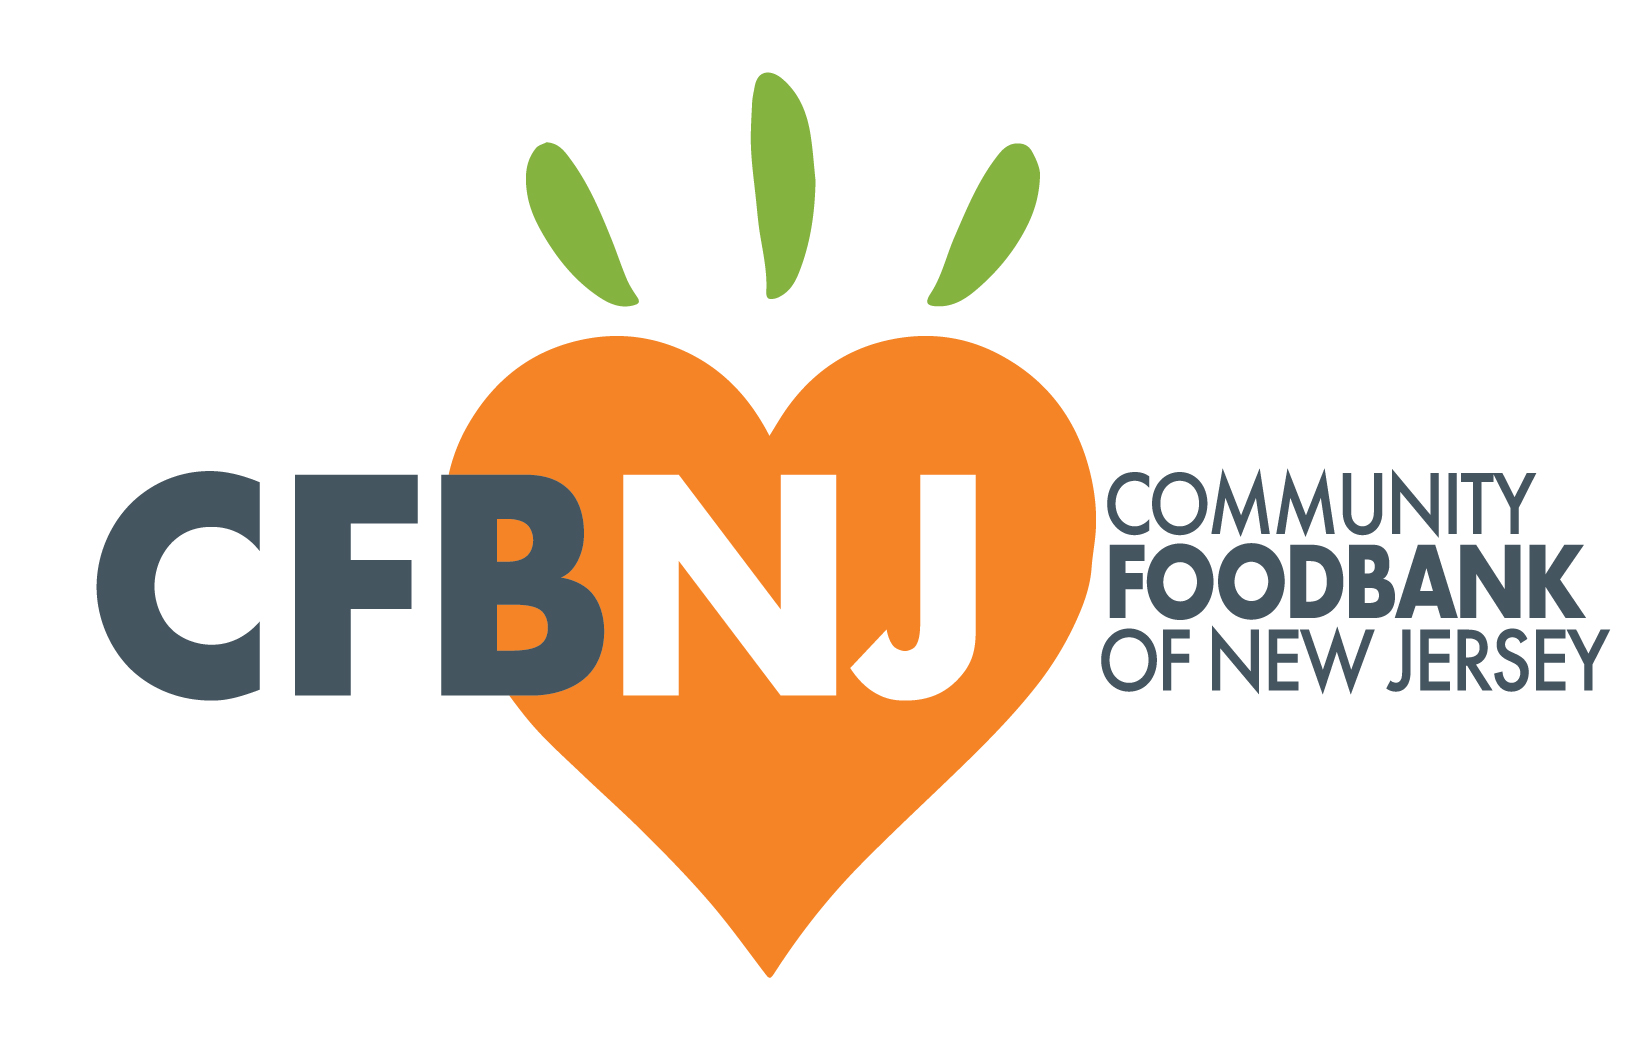 Community Foodbank of New Jersey